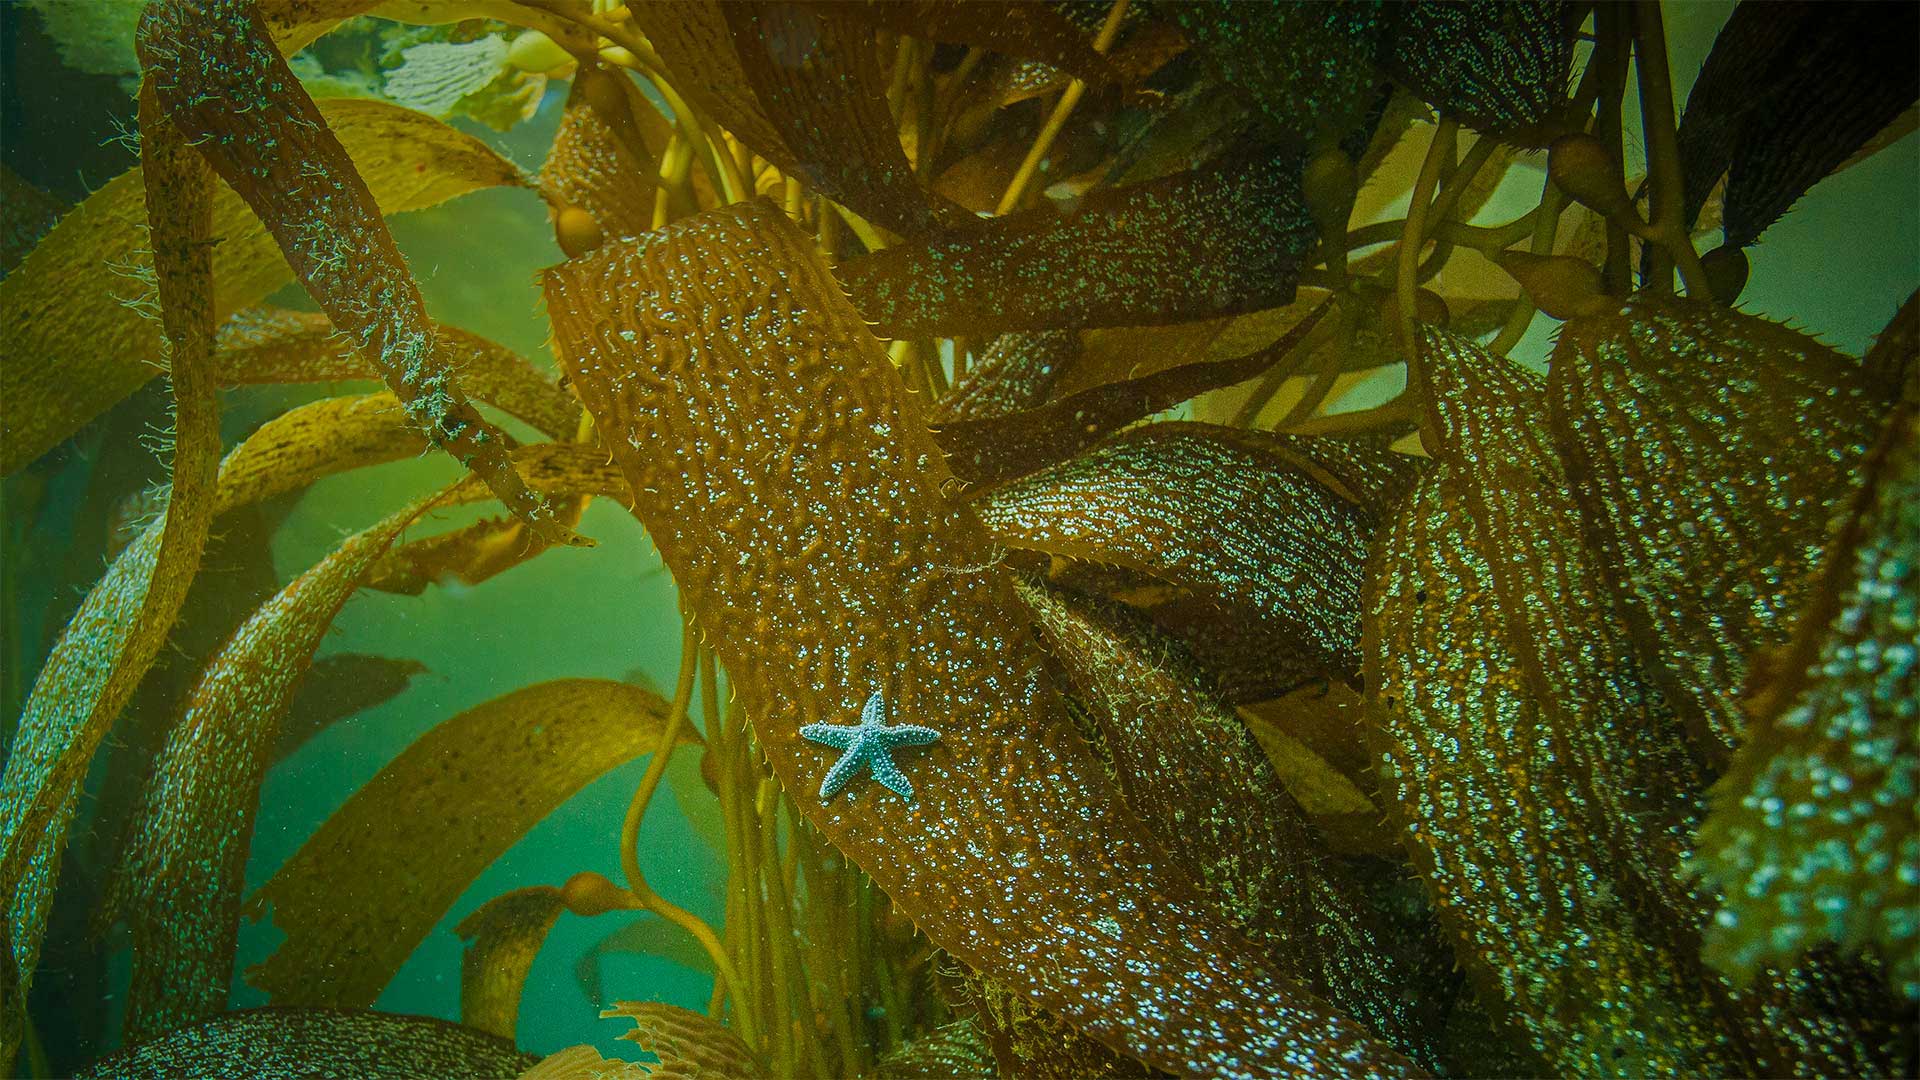 Ochre sea star on kelp off the coast of California - Ralph Pace